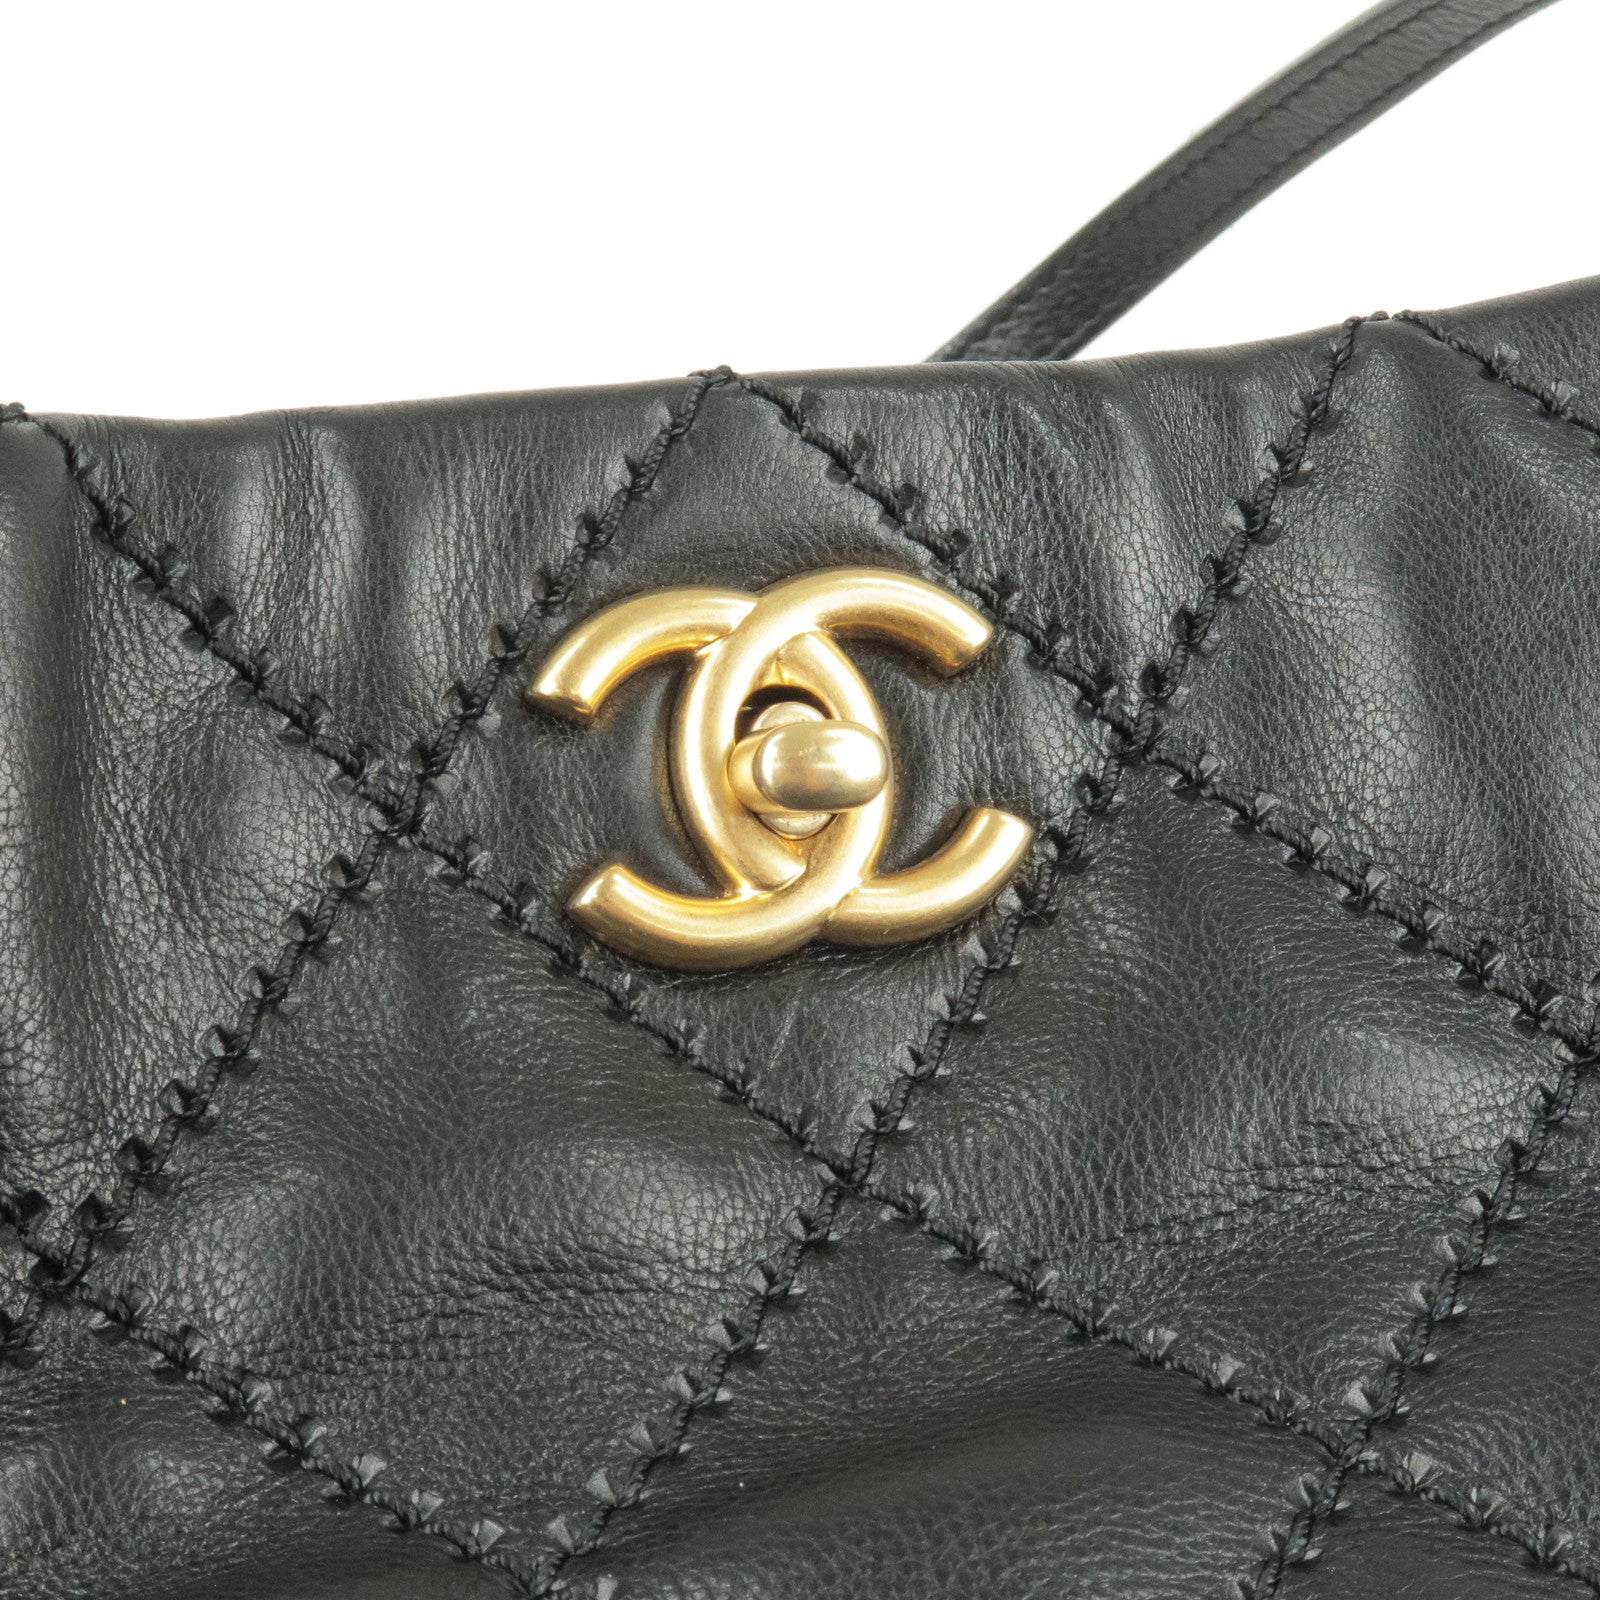 Chanel Pre-owned 1997 CC Turn-Lock Top-Handle Bag - Black